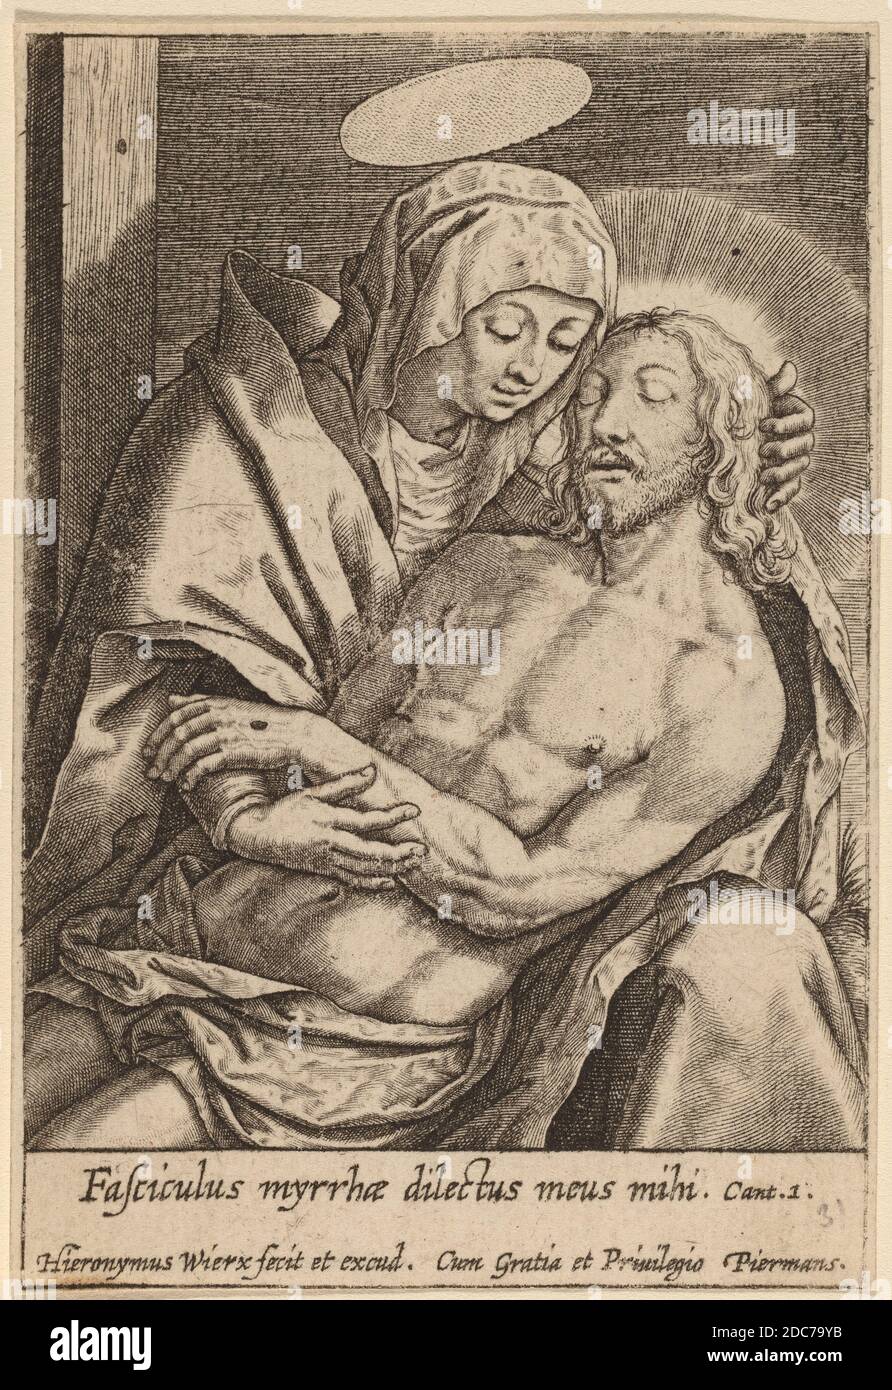 Hieronymus Wierix, (artist), Flemish, c. 1553 - 1619, Fasciculus myrrhae dilectus meus mihi, engraving Stock Photo